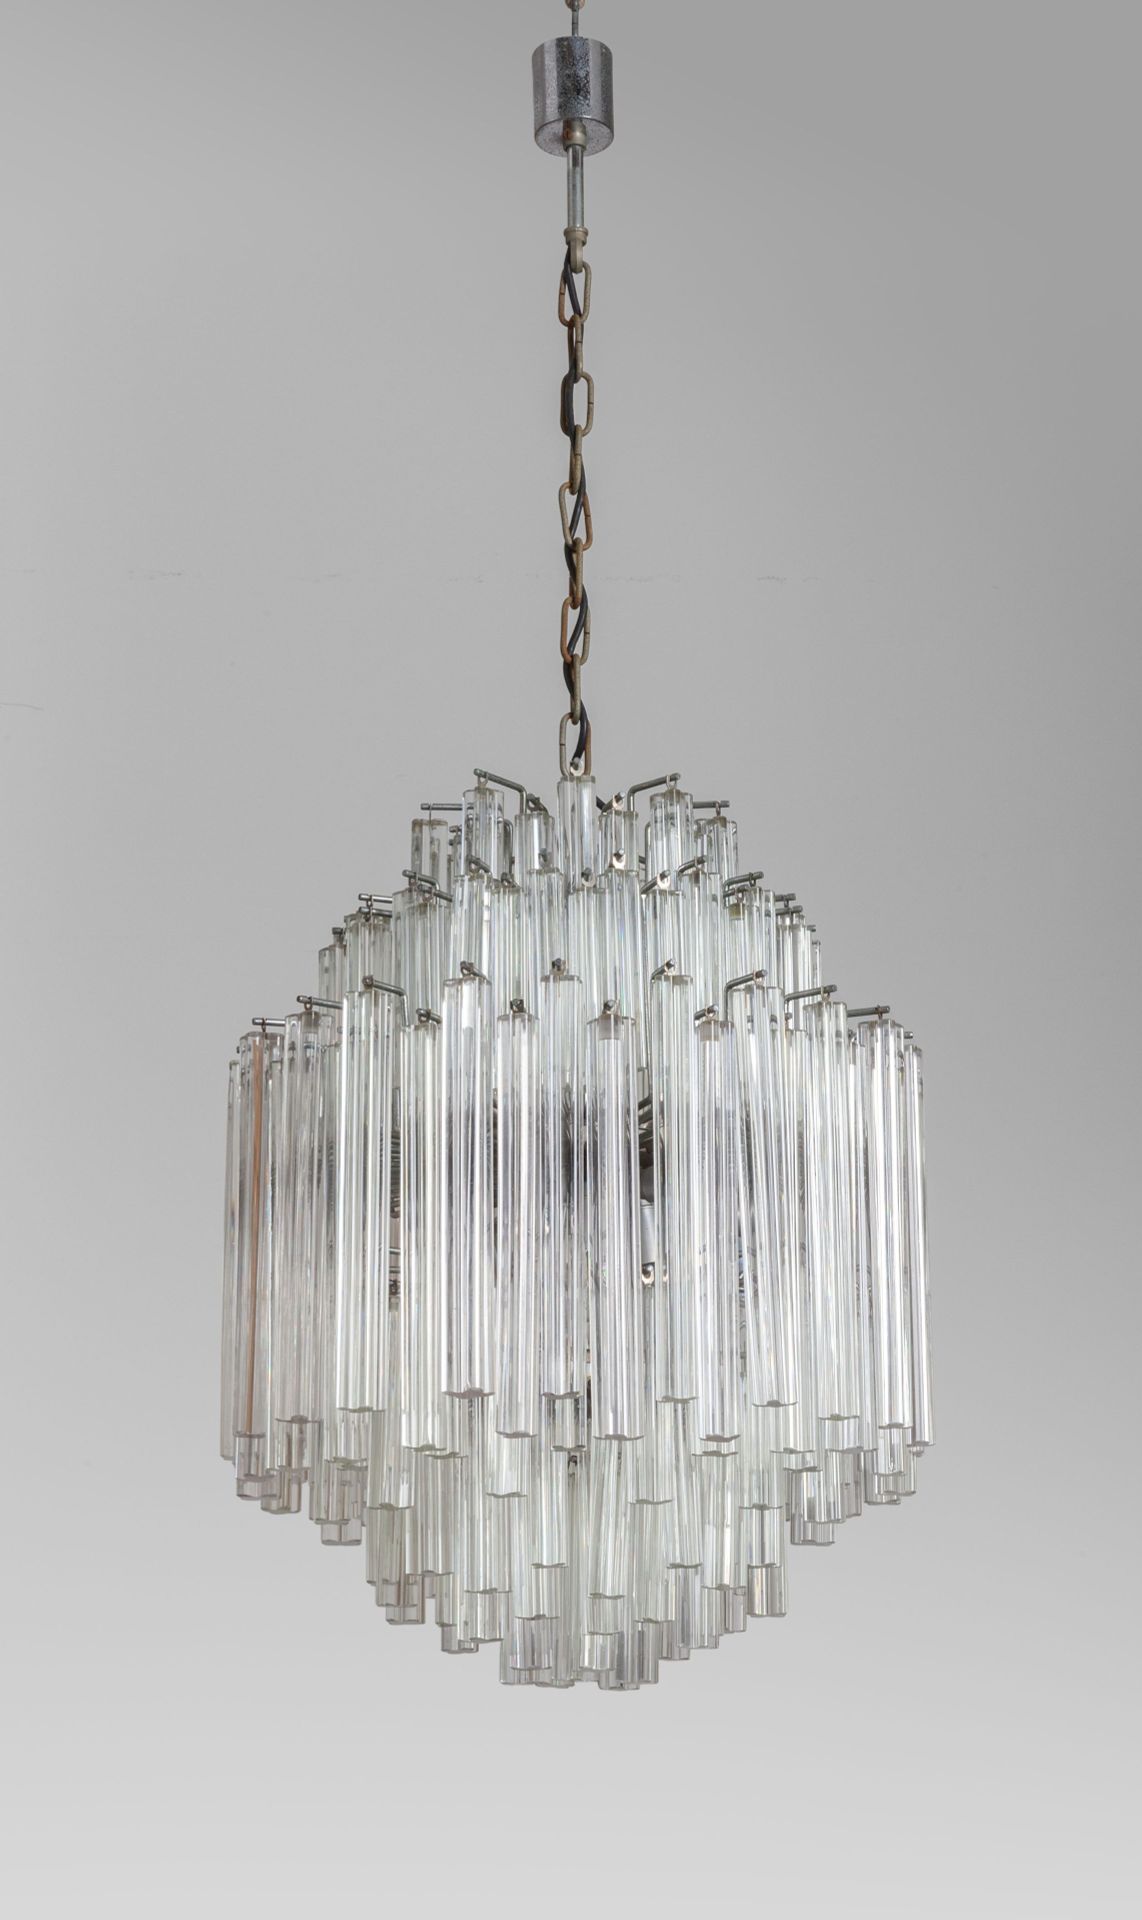 VENINI 20 世纪 60 年代的维尼尼。
吊灯。
钢结构'Quadrilobi'玻璃。
高 120 厘米，直径 50 厘米。